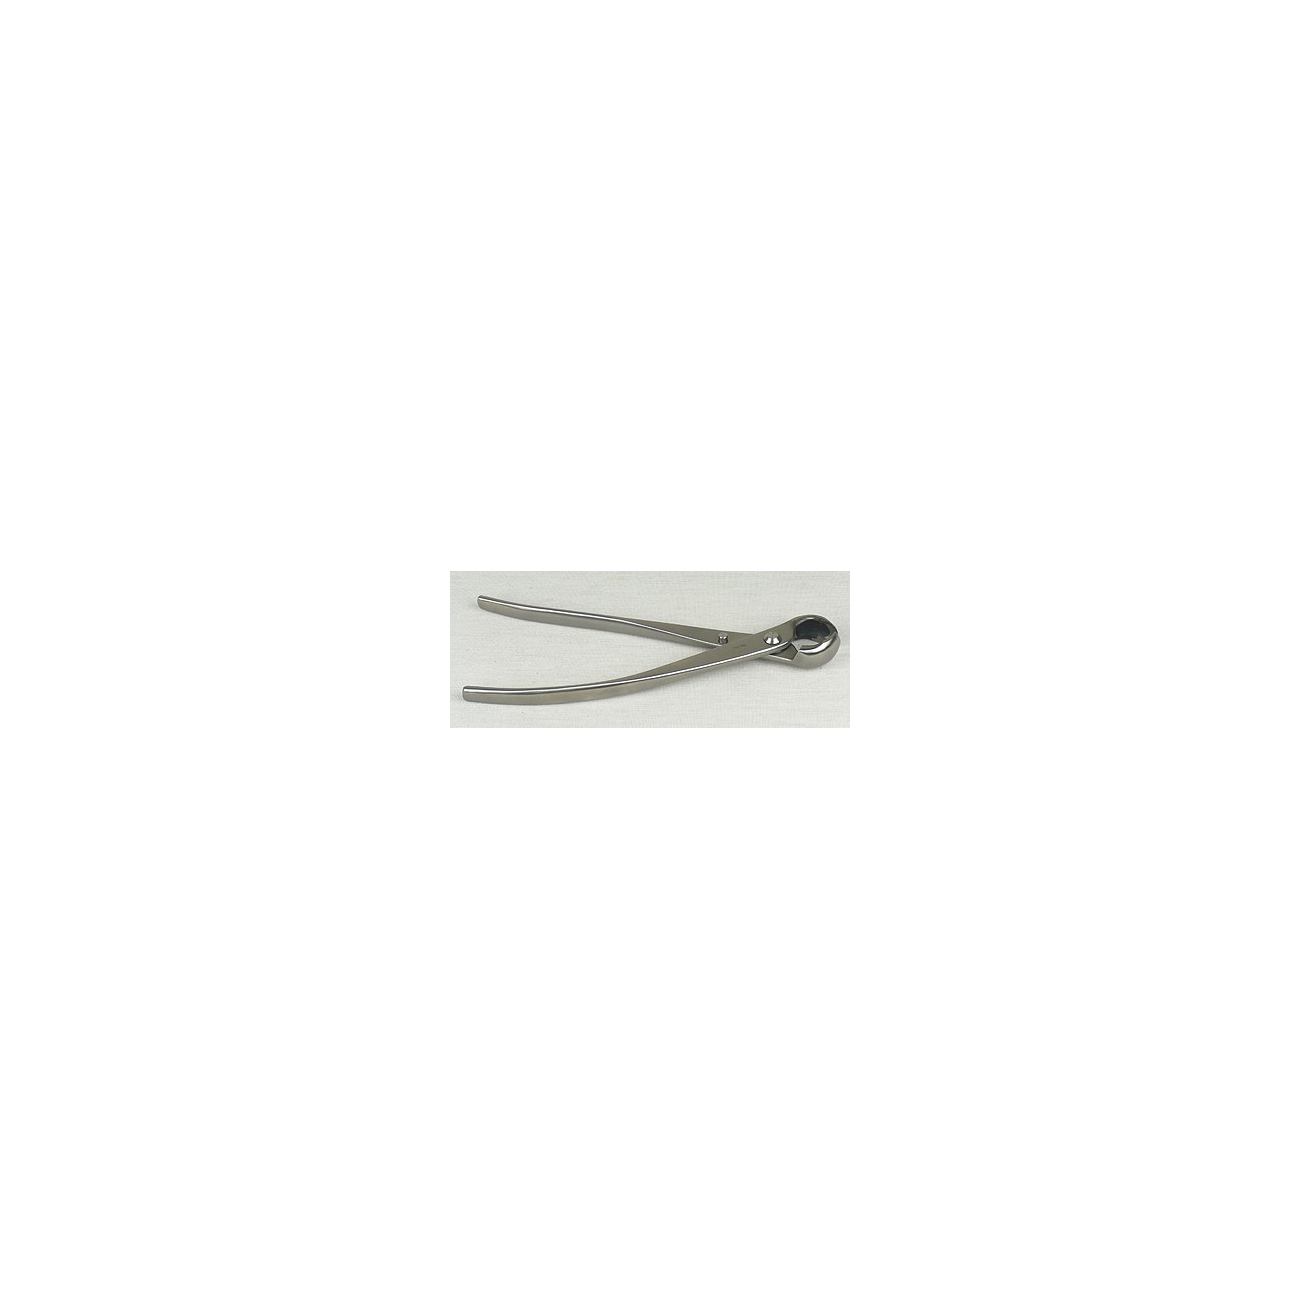 Stainless steel knob cutter Kaneshin KN810  205 mm